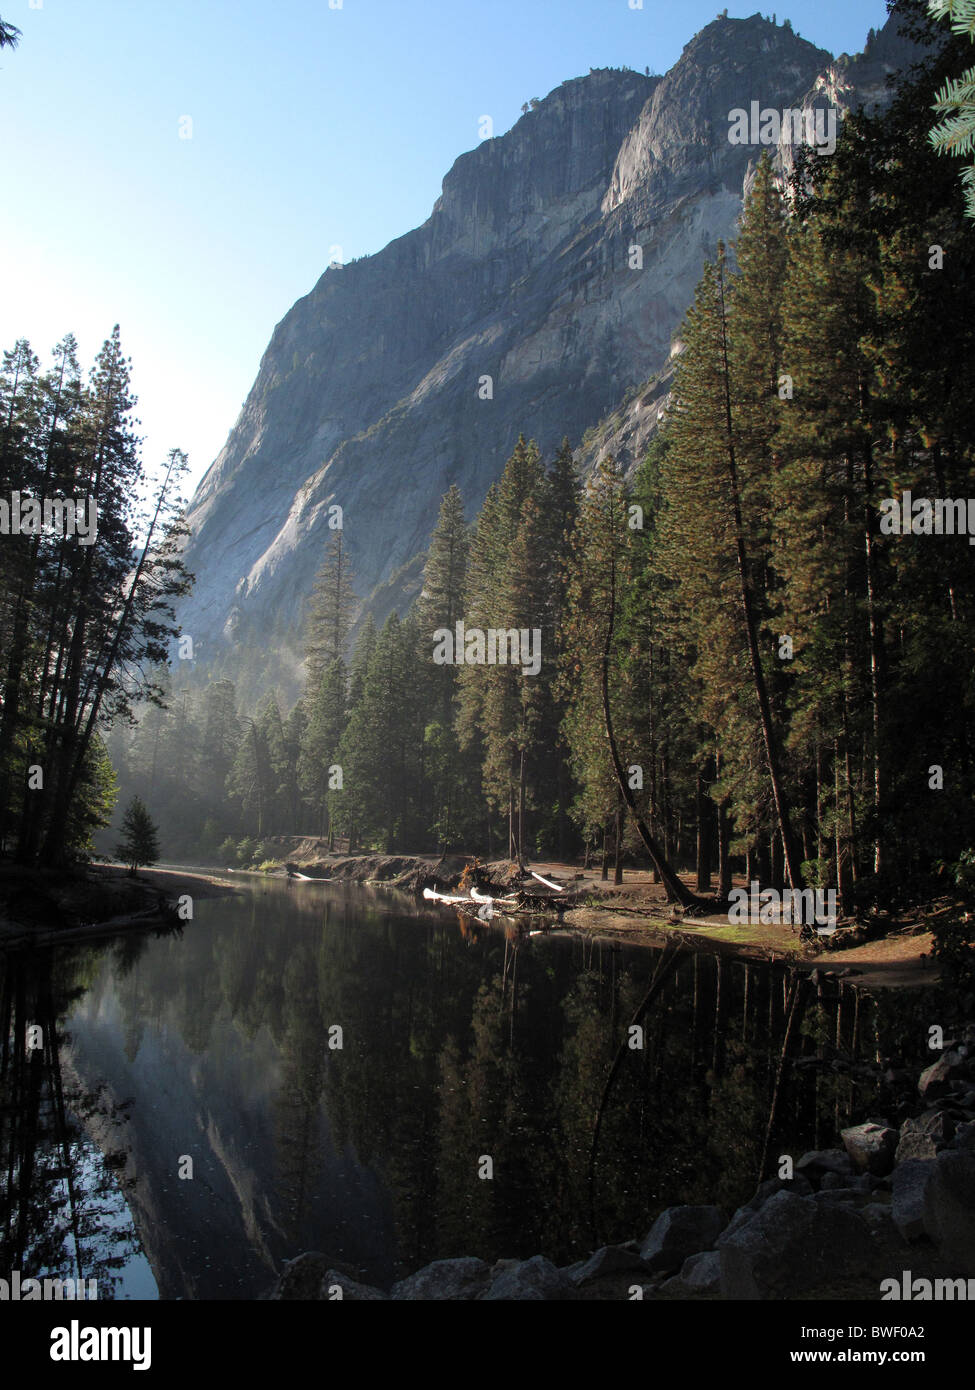 Rio Merced. Merced River. Parque Nacional de Yosemite. Yosemite National Park. California, Estados Unidos. United States. Stock Photo